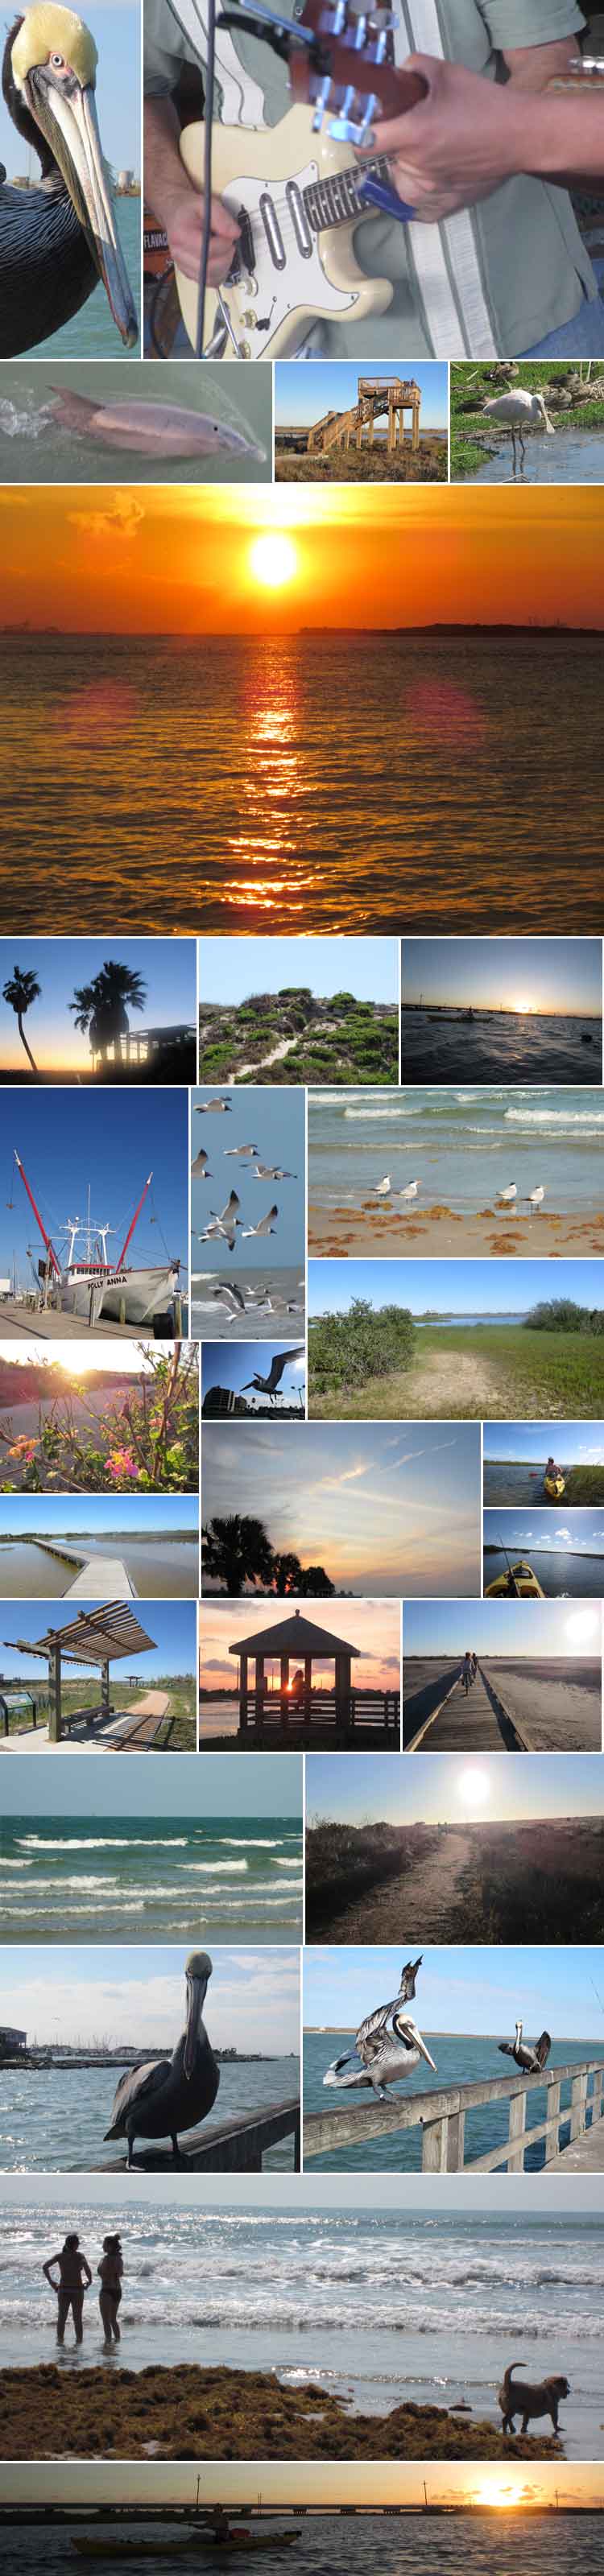 Coastal Bend Attractions - Vacation Rentals in Corpus Christi, Port Aransas, Rockport, Portland, Aransas Pass and more.